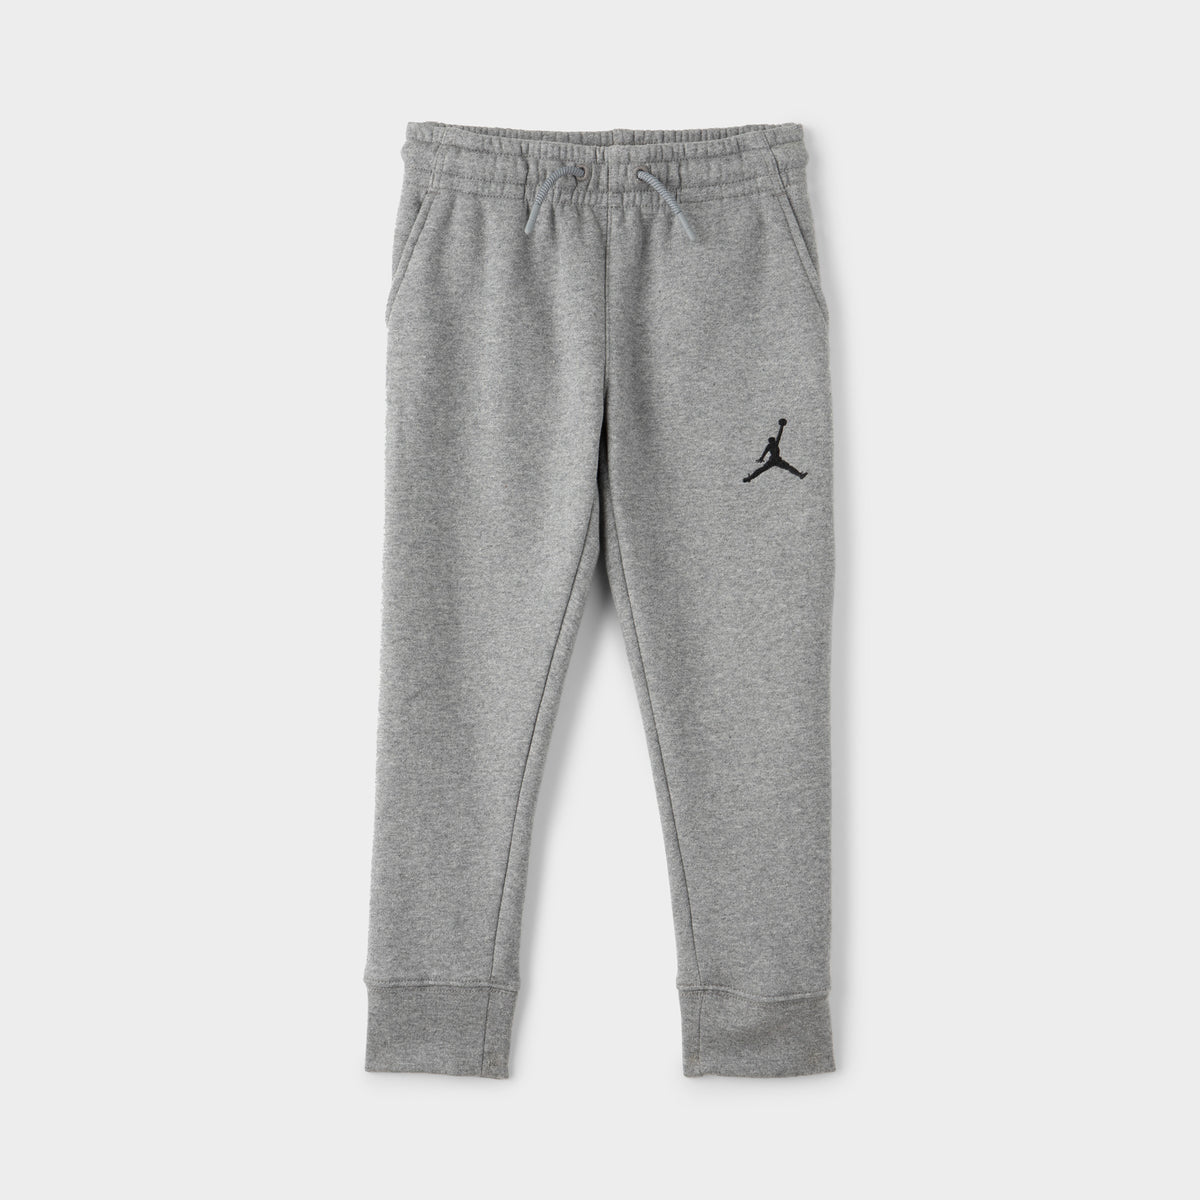 NWT Nike Air Jordan Compression Pants (5)